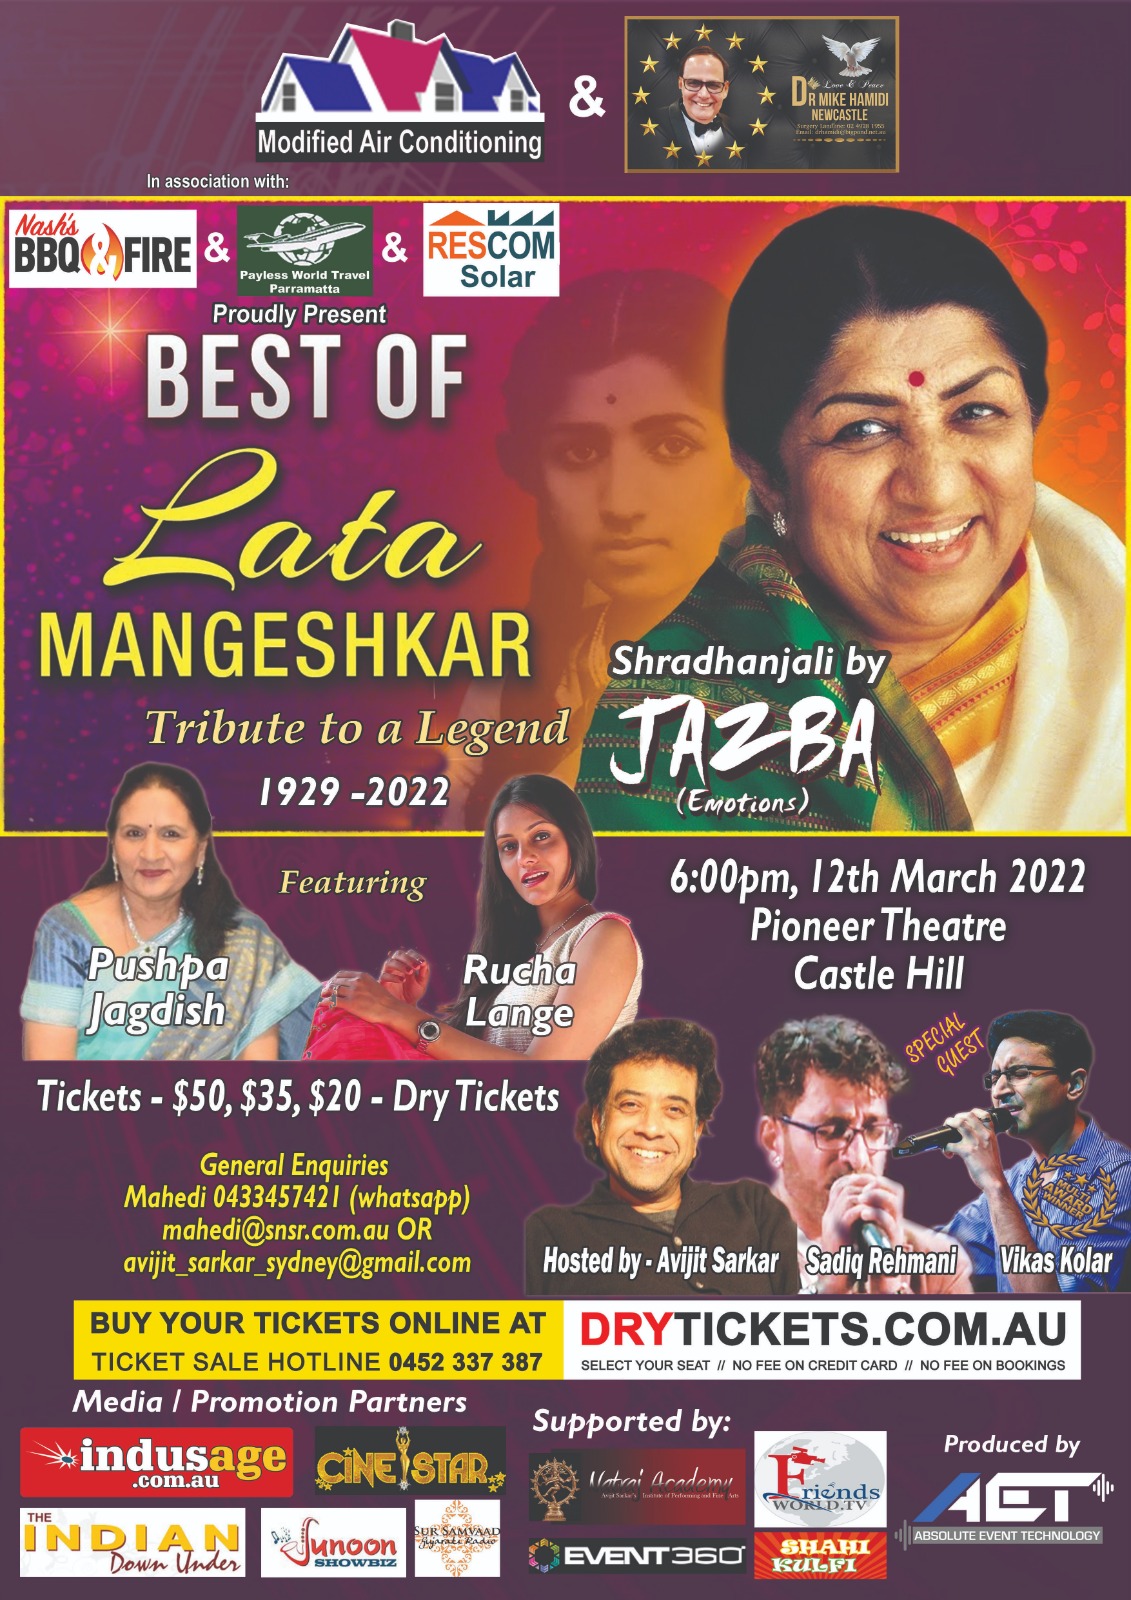 Best of Lata Mangeshkar - Tribute to a Legend 1929 - 2022 Shradhanjali by Jazba